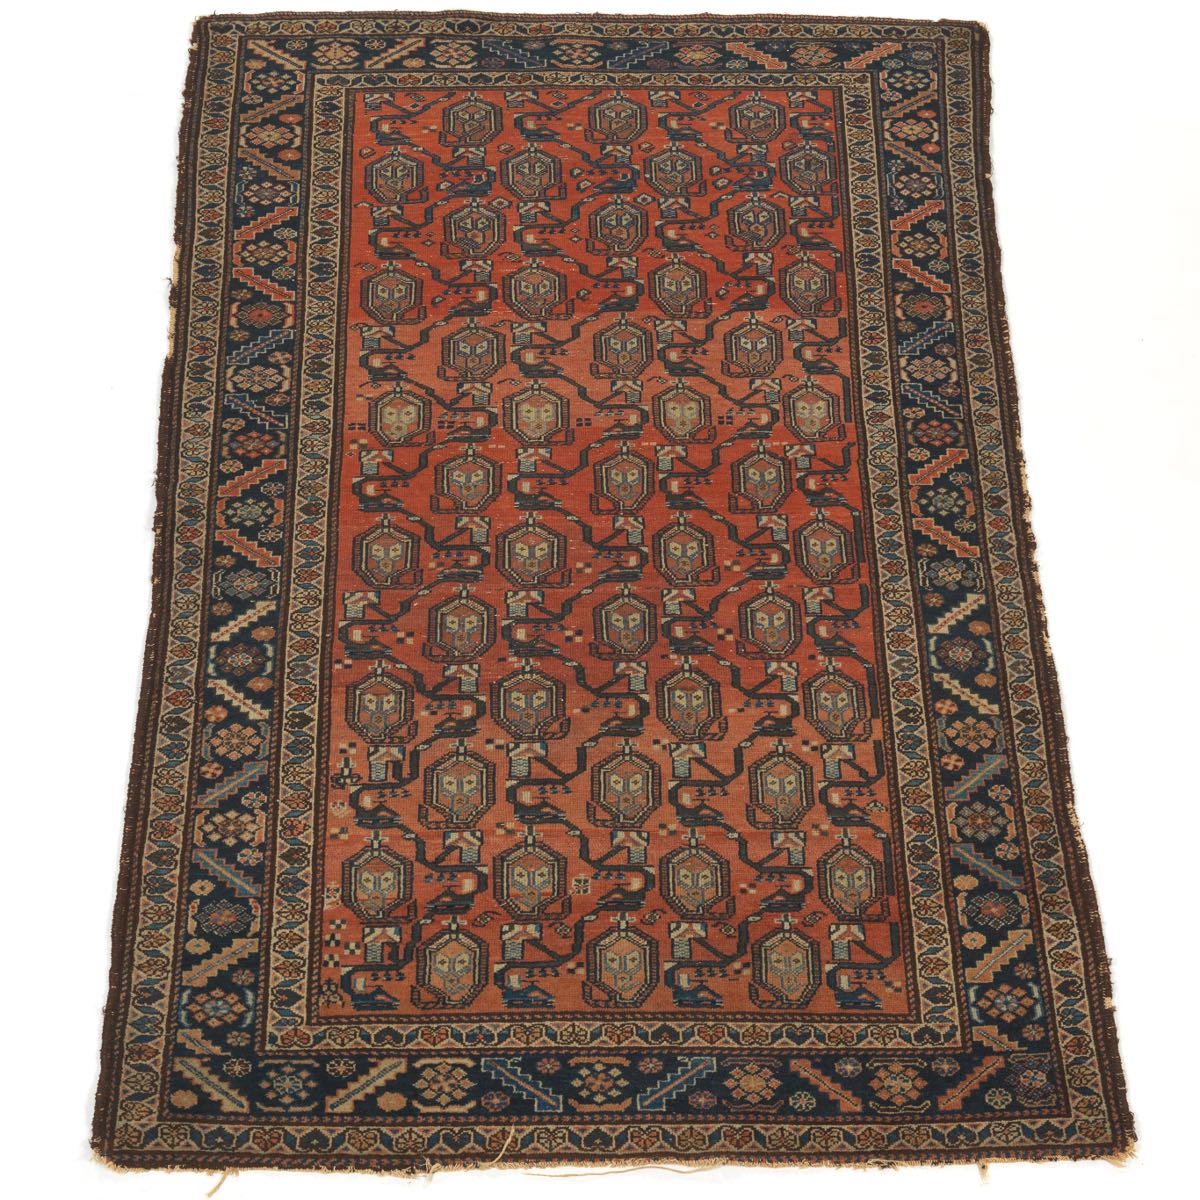 Genji Carpet, 19th Century 6'8" x 4'3"Wool on wool weft, flat wove with no pile. Nomadic carpet,